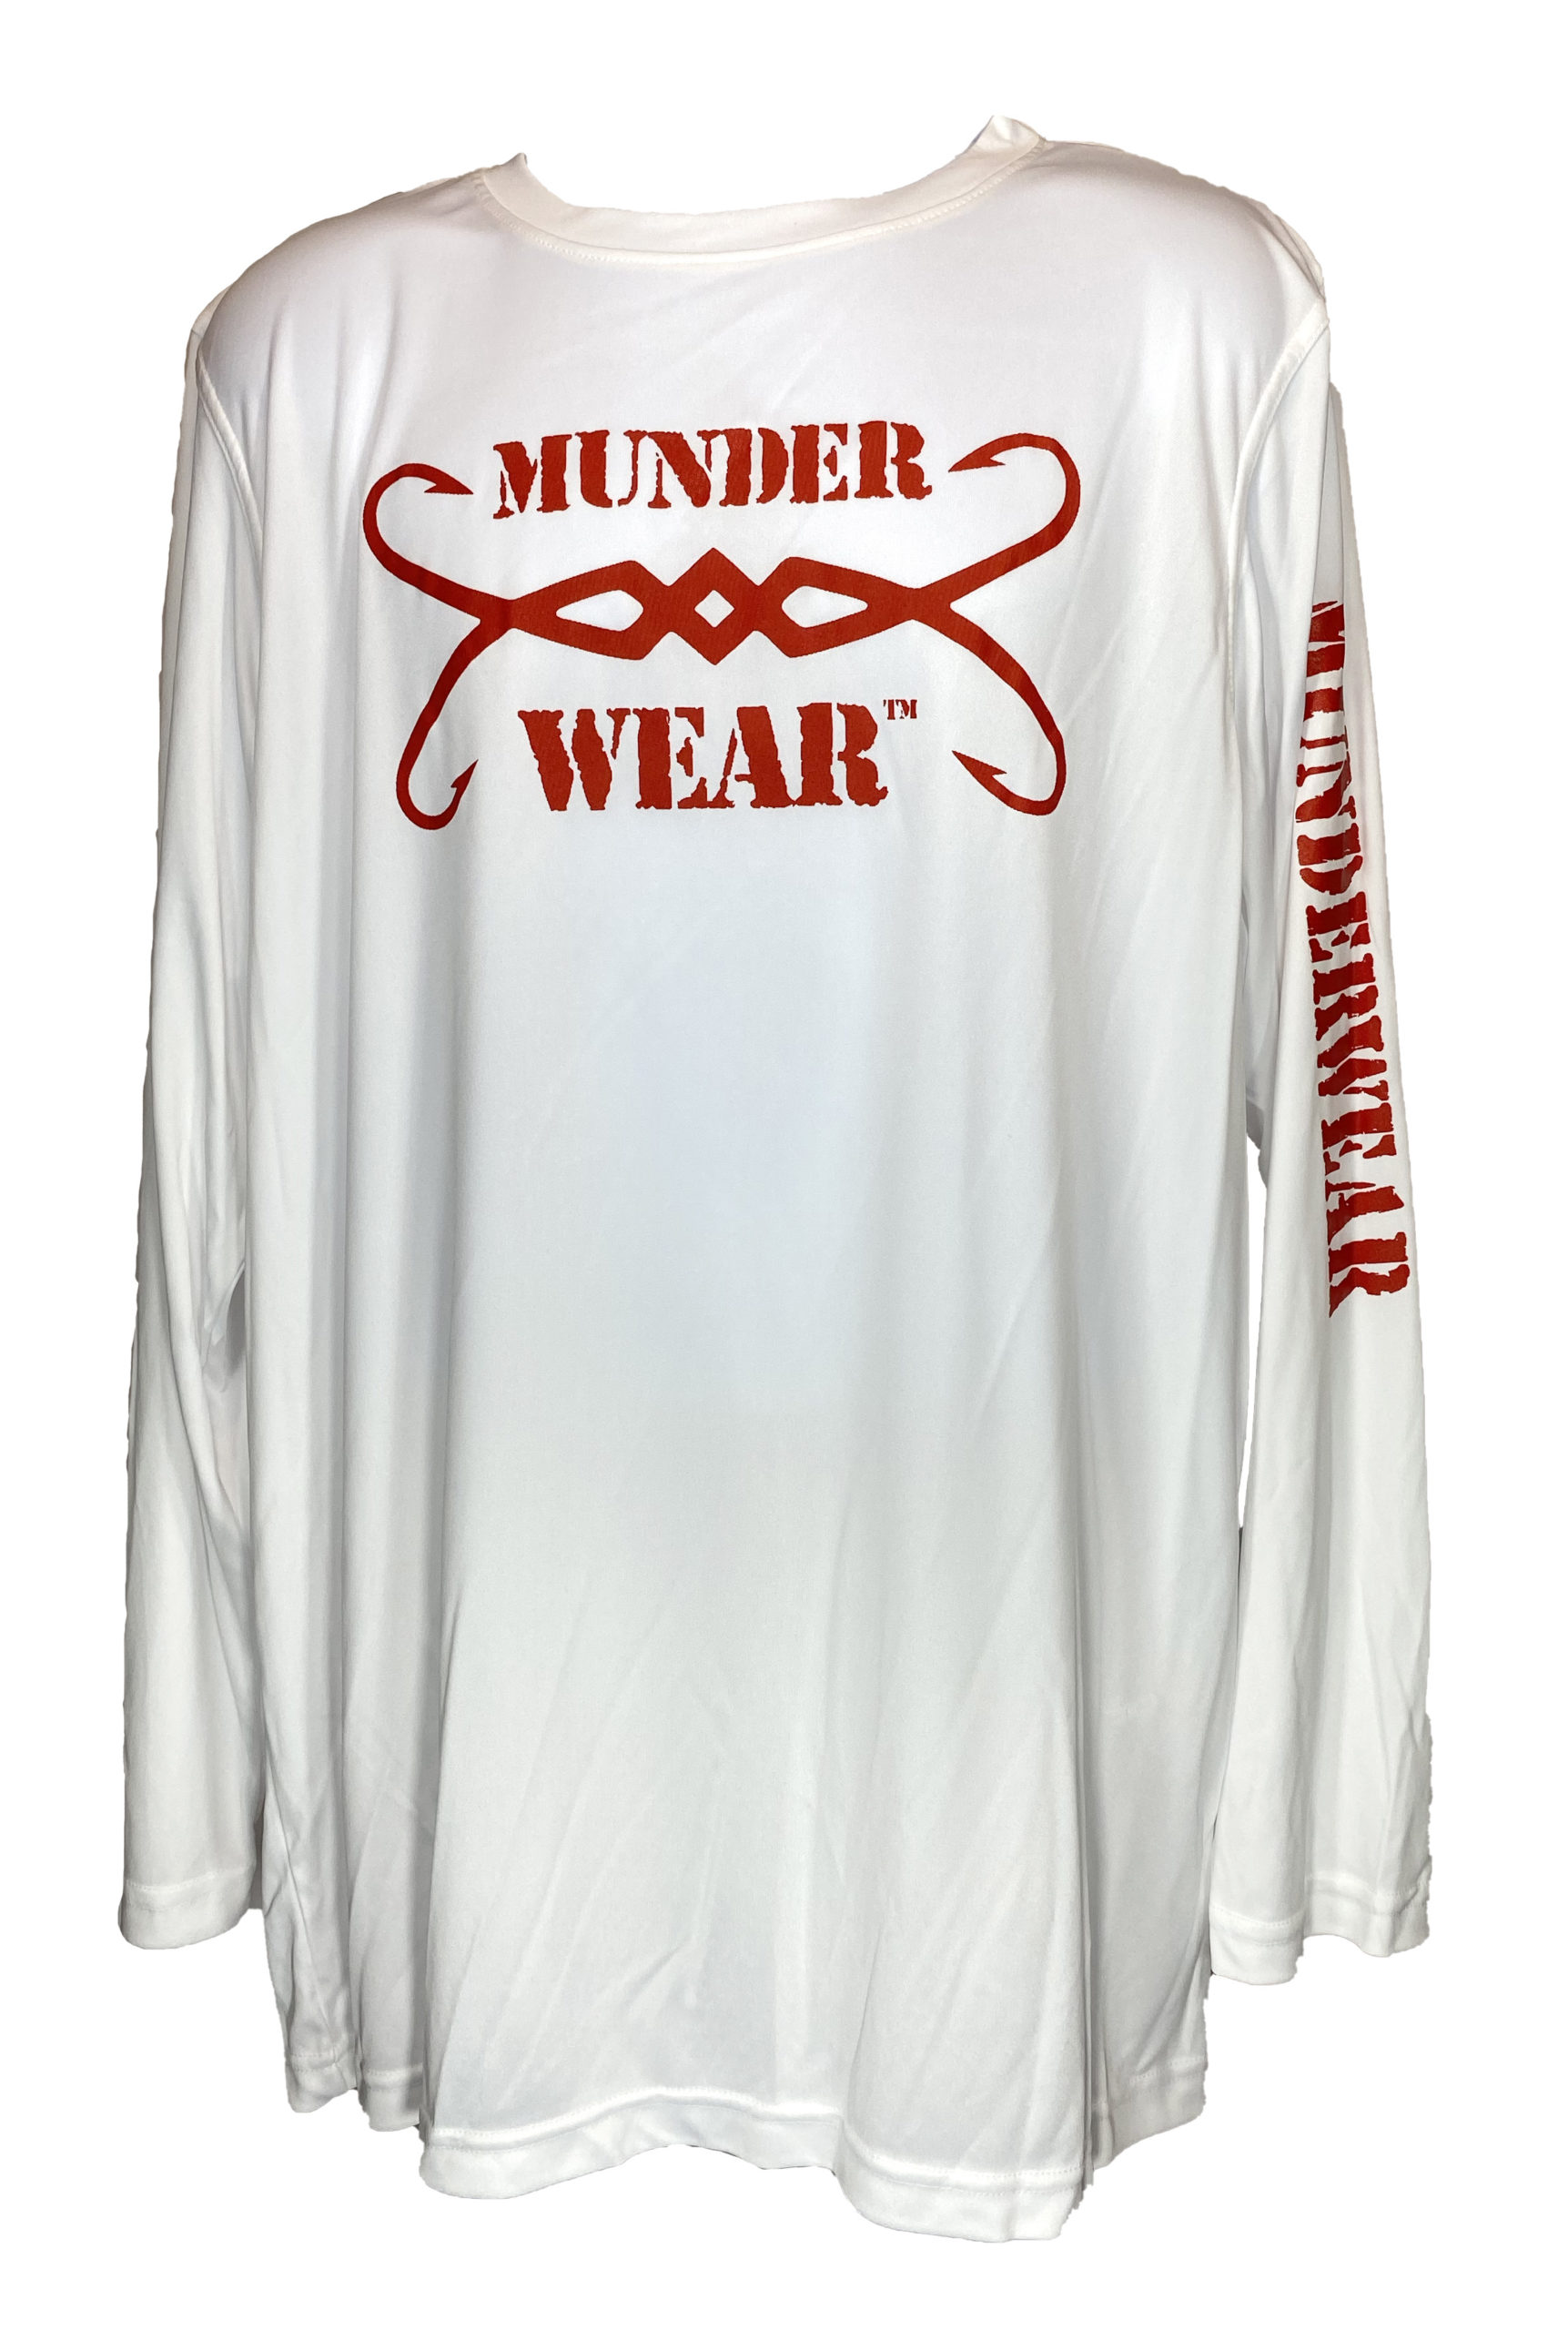 Long Sleeve Fish Hook Shirt - MUNDER WEAR